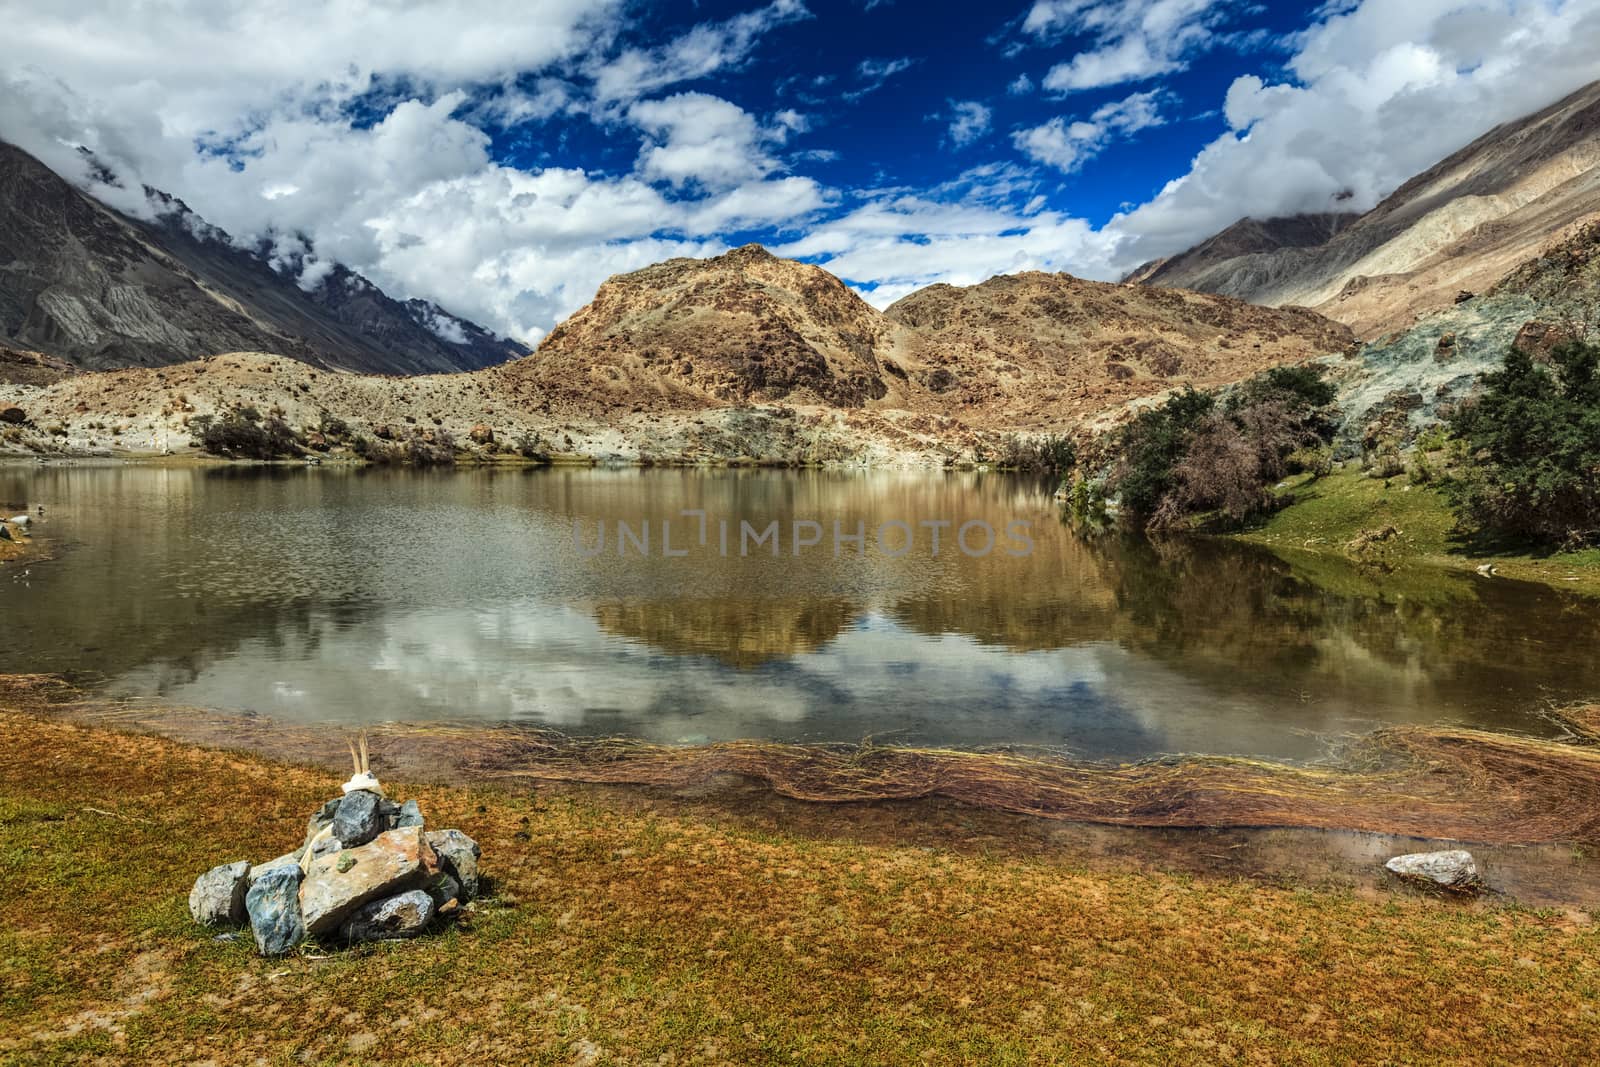 Lohan Tso mountain lake. Nubra valley, Ladakh, India by dimol